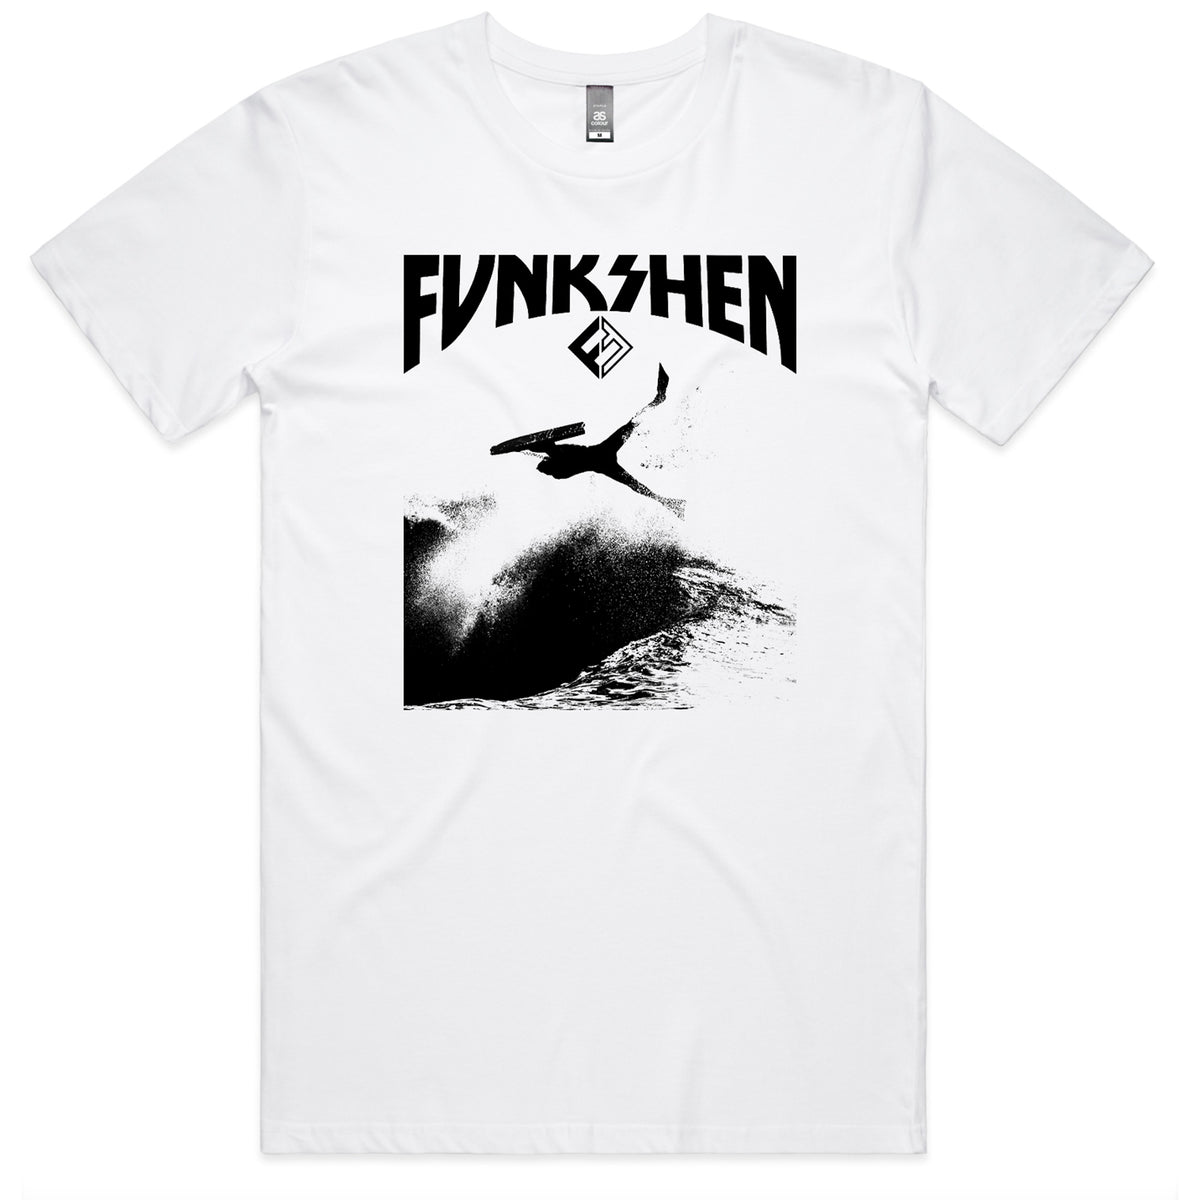 Funkshen INVERT T-Shirt - White